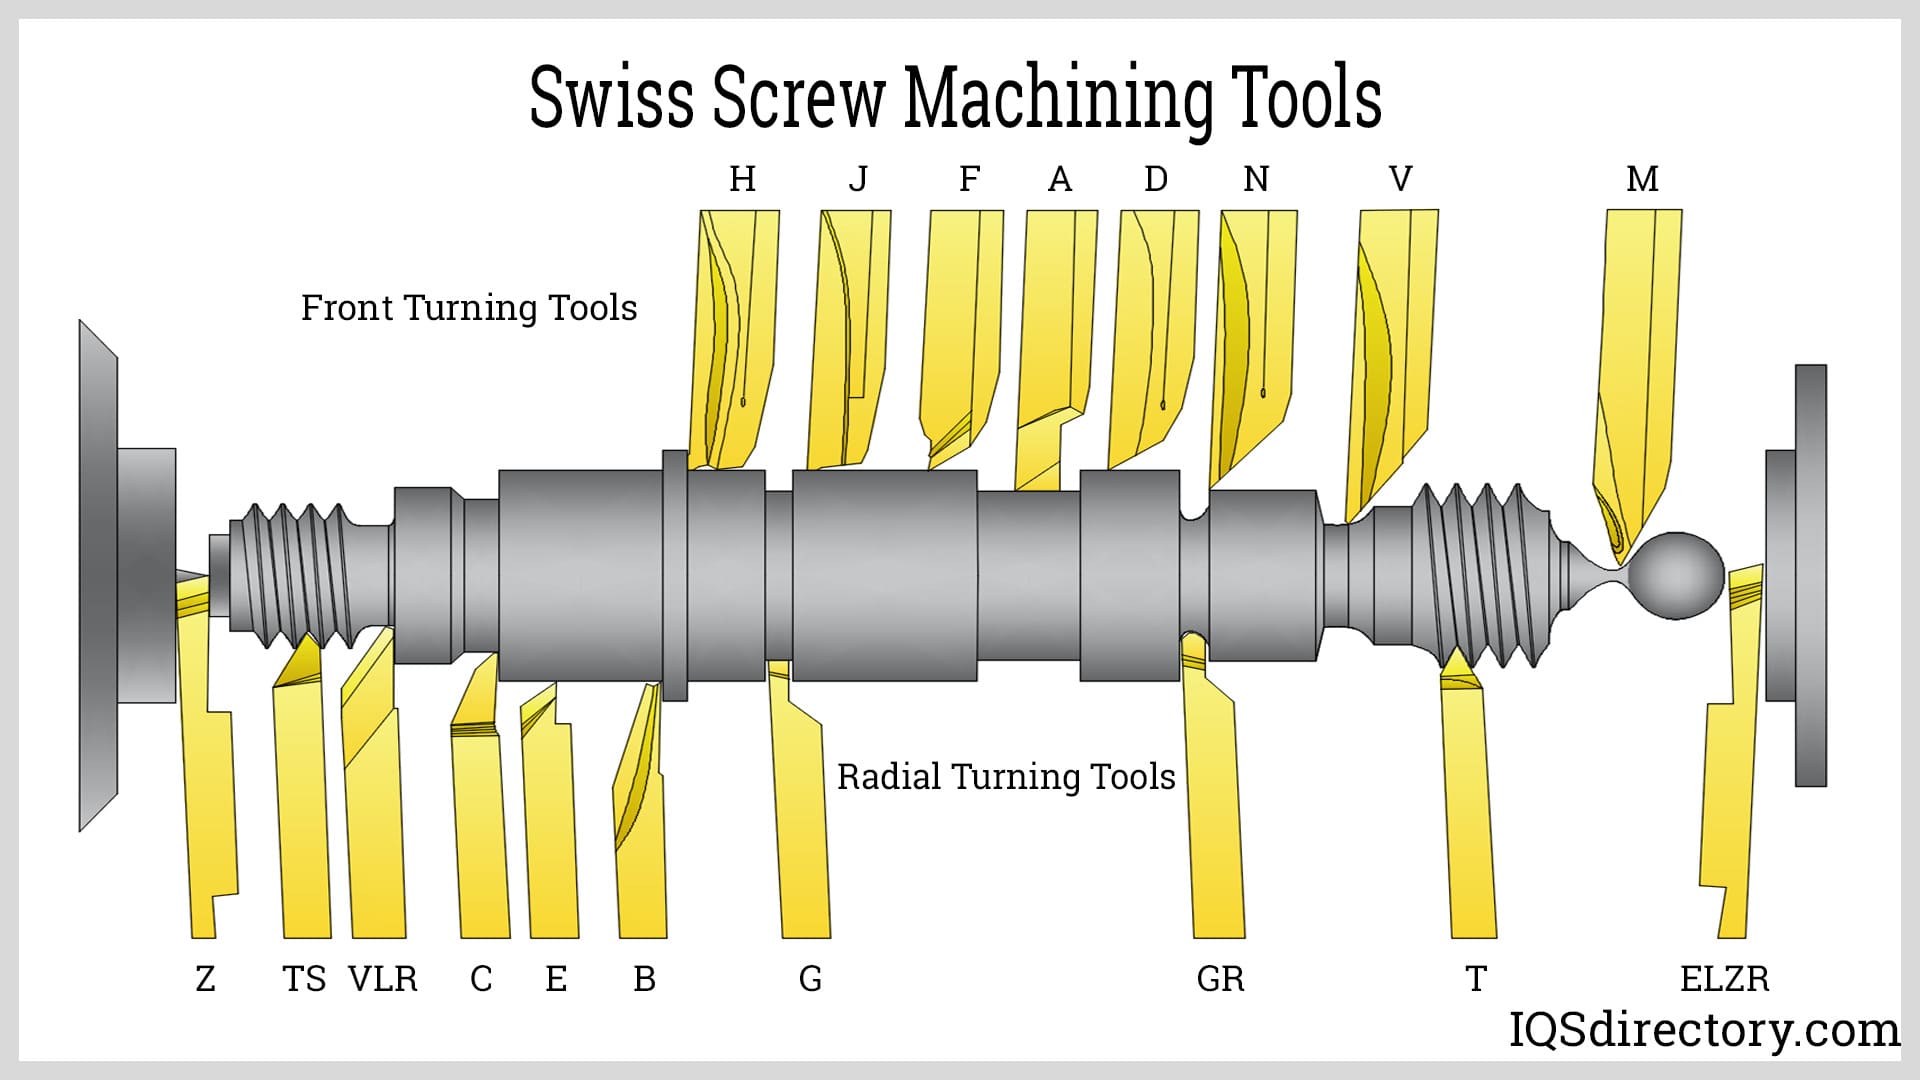 Swiss Screw Machining Tools